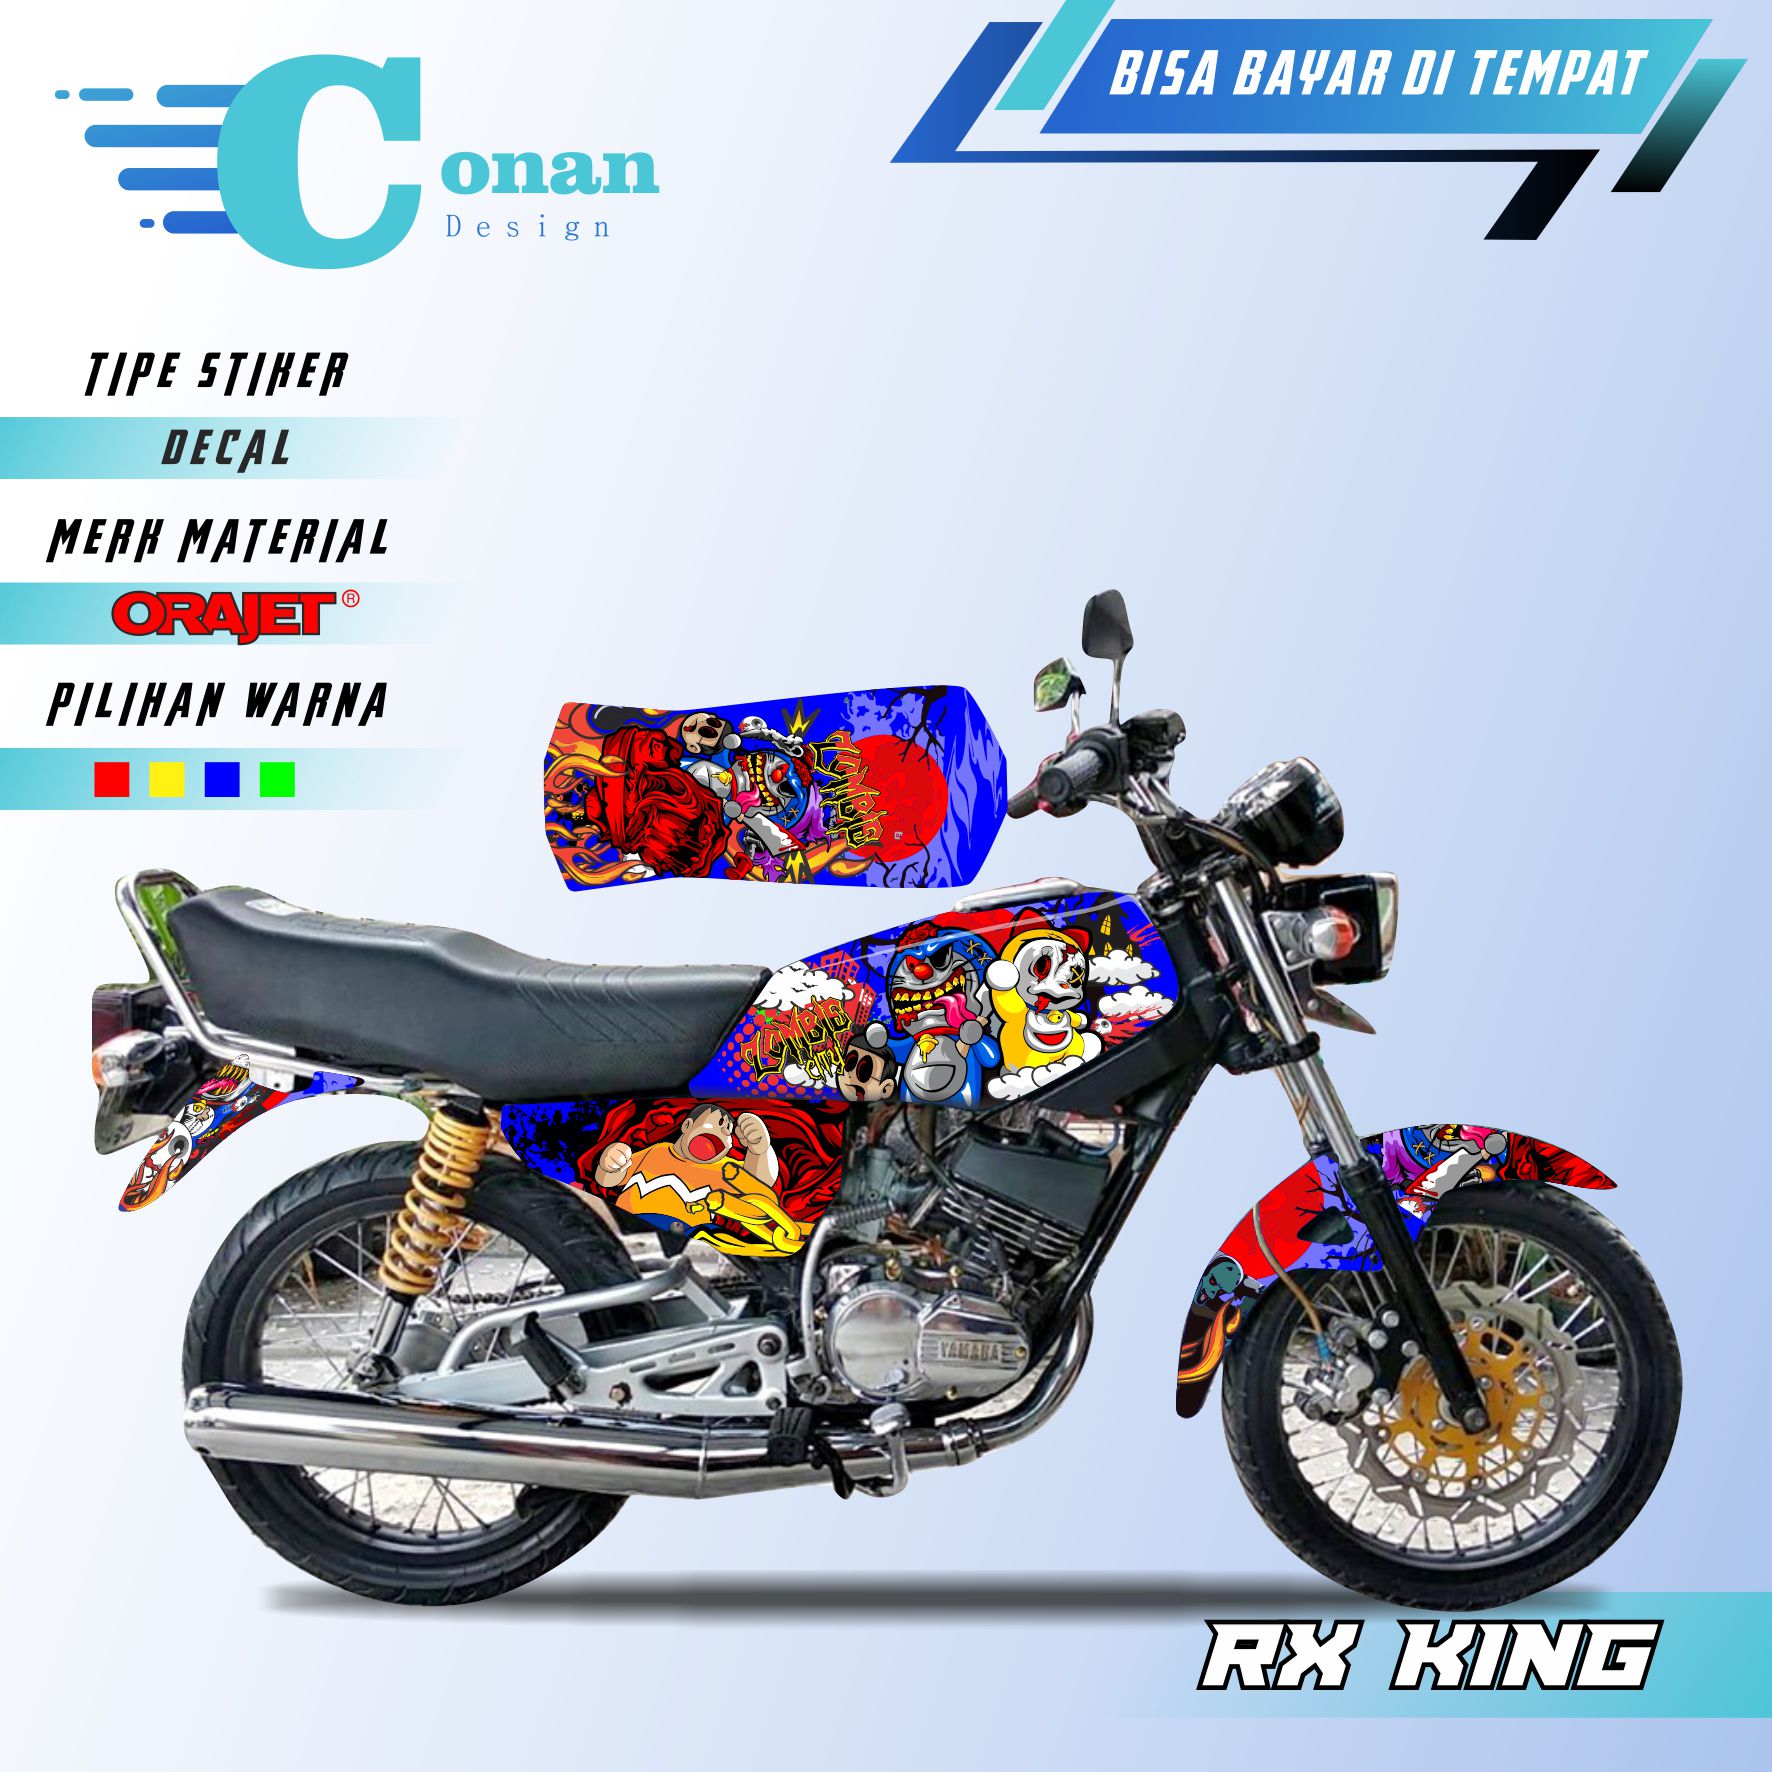 Sticker Variasi Motor Stiker Striping Decal Yamaha RX King Doraemon Zombie Conan Design Sticker Lazada Indonesia